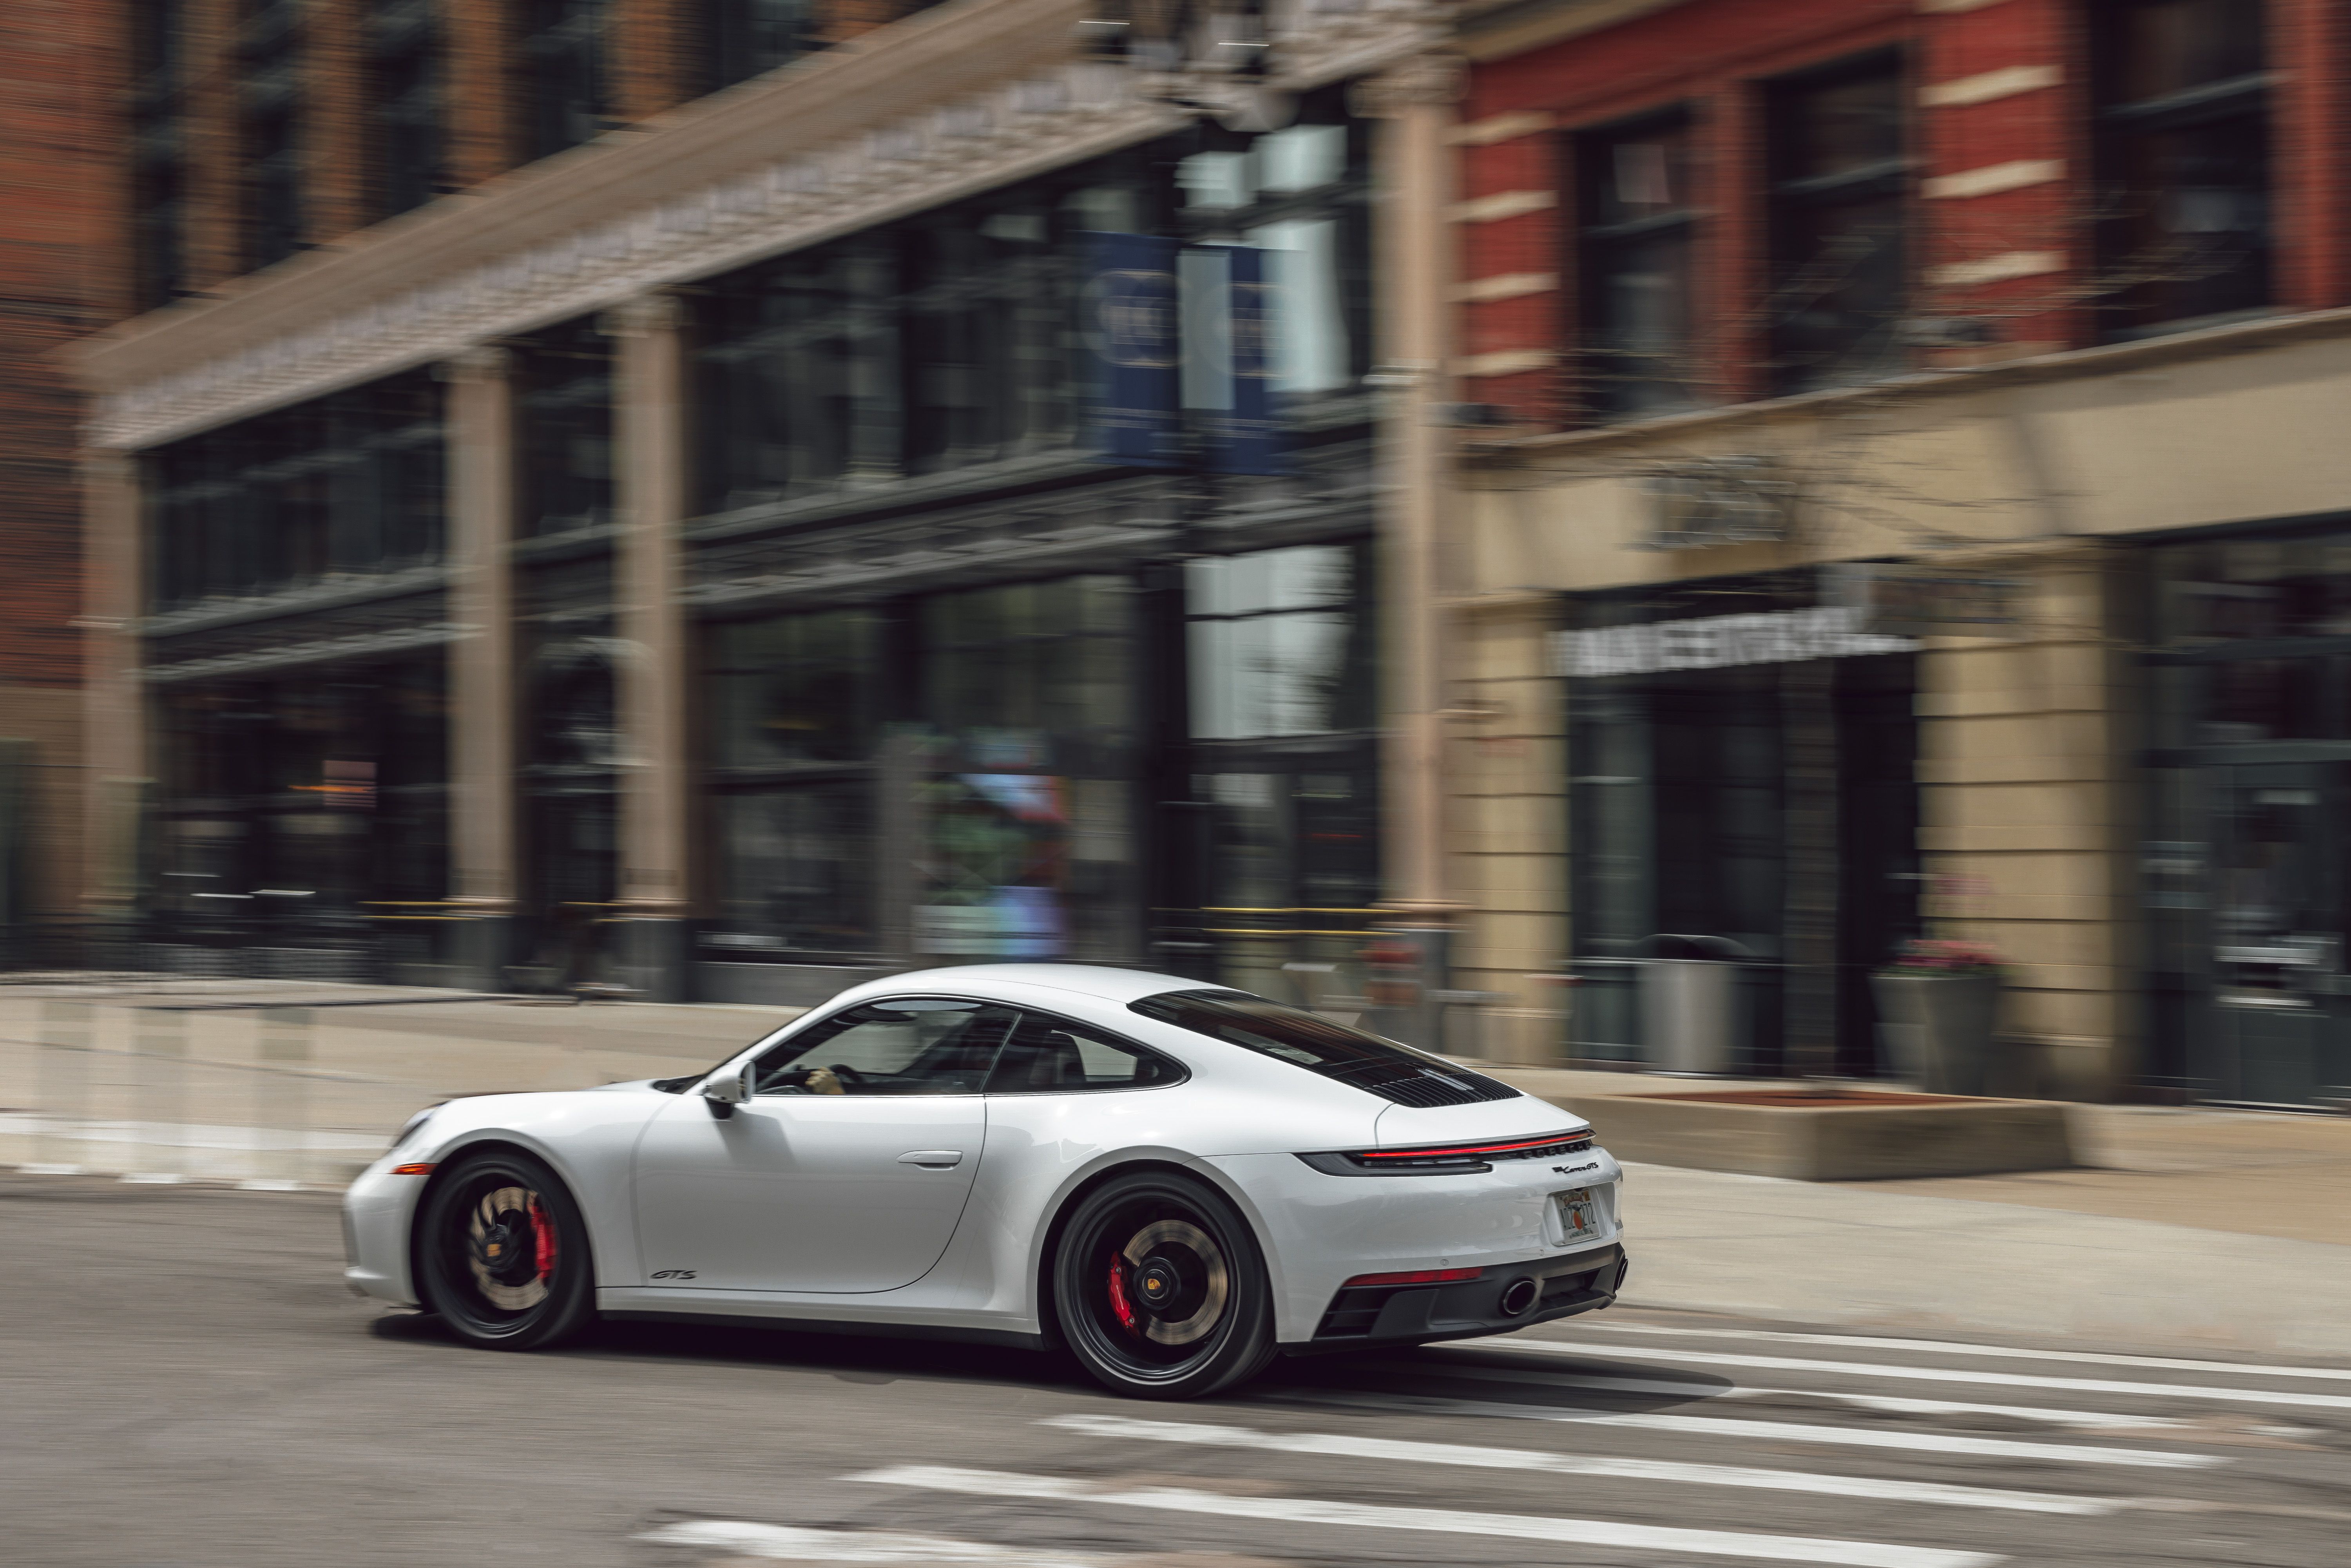 World's blackest Porsche 911 looks unreal and disorienting